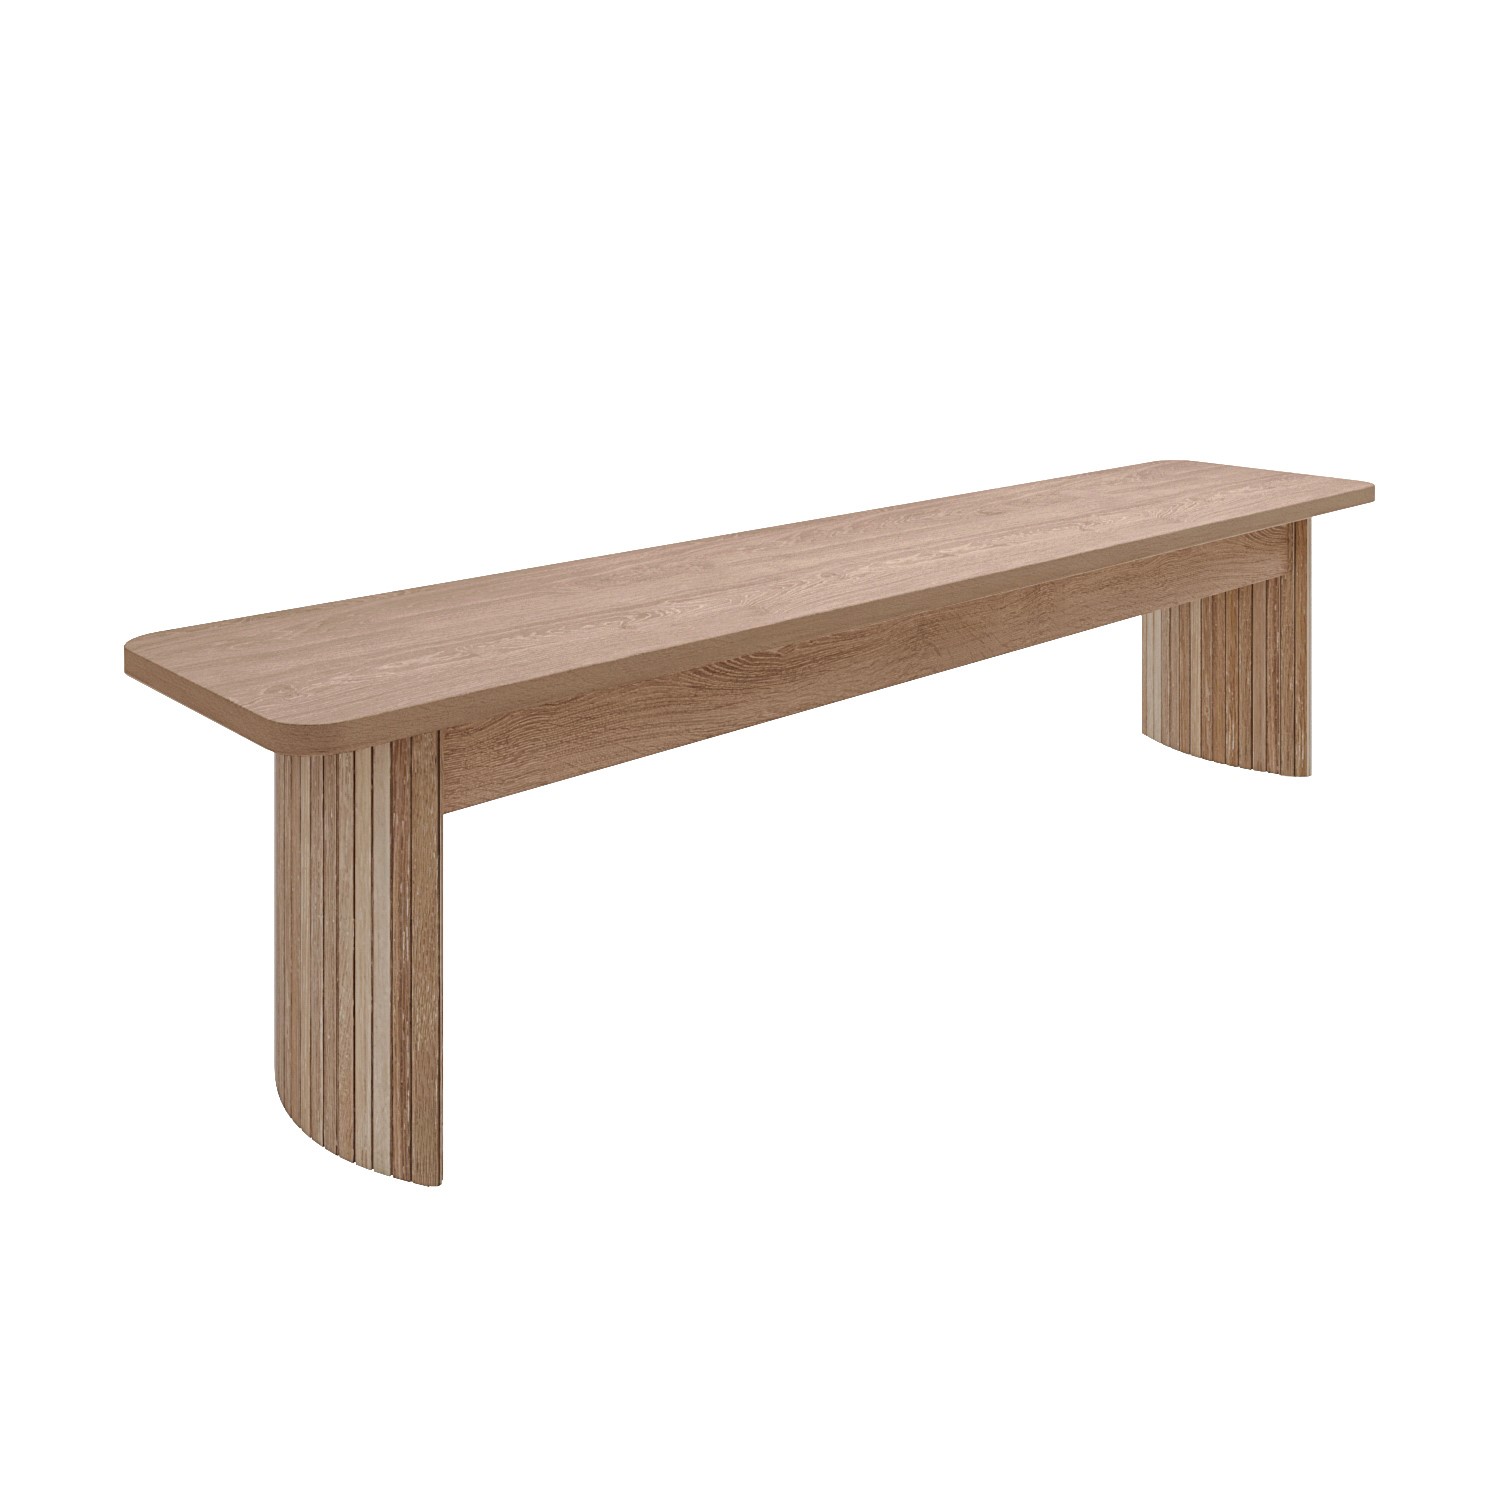 Photo of Large light oak dining bench - seats 3 - jarel